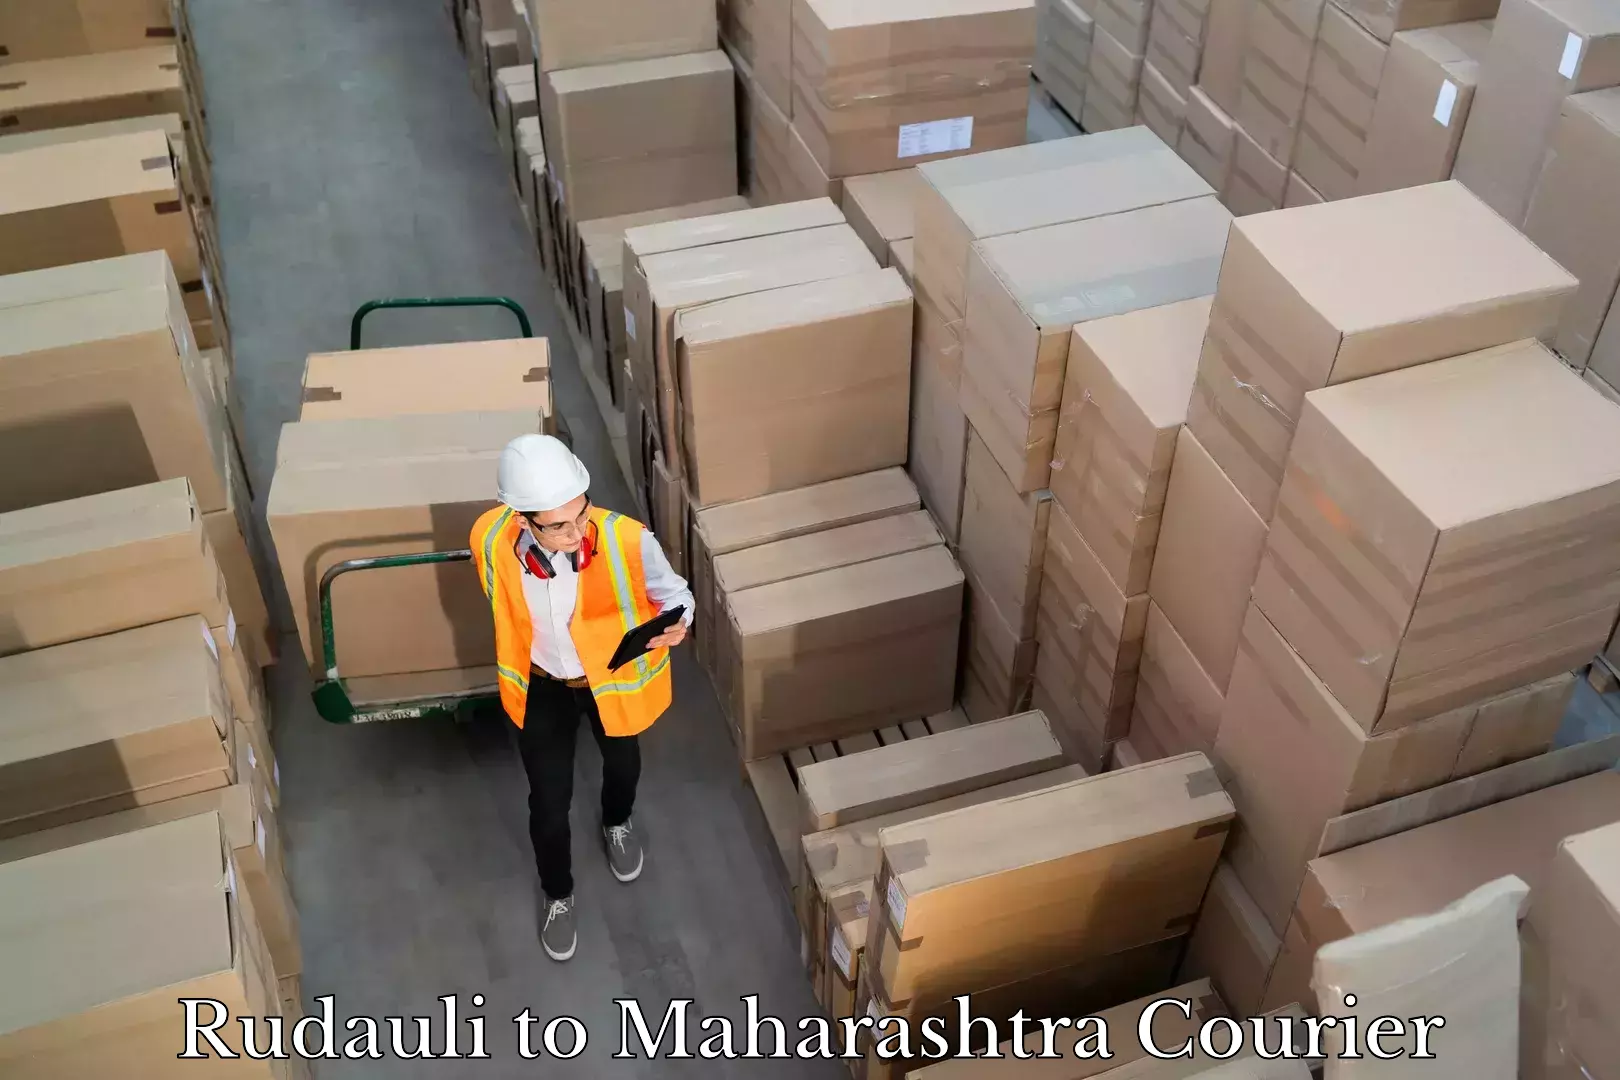 24/7 courier service in Rudauli to Maharashtra